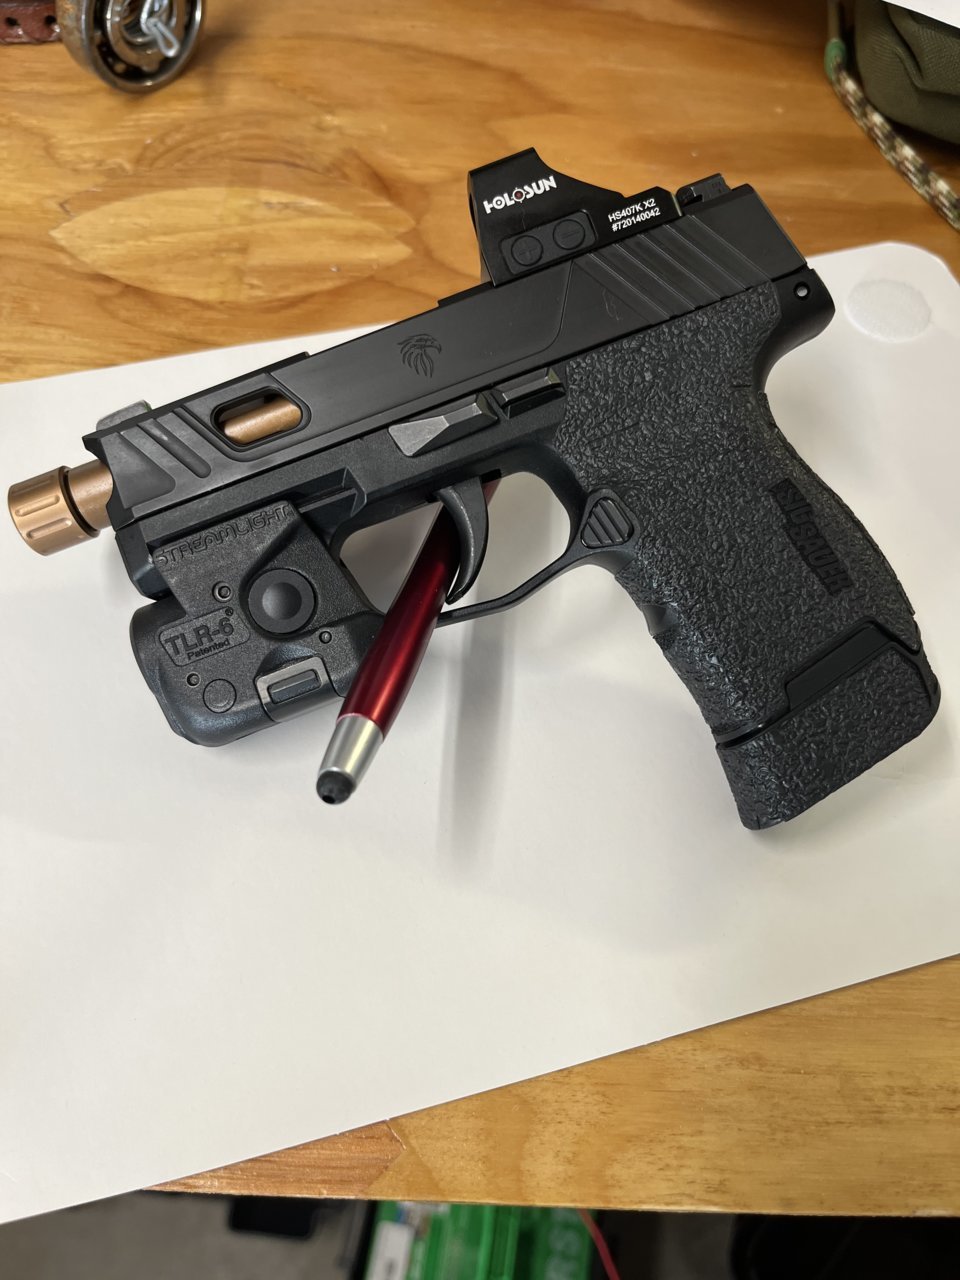  DBTAC Gun Range Bag Small  Tactical 2x Pistol Shooting Range  Duffle Bag with Lockable Zipper for Handguns and Ammo (Black) : Sports &  Outdoors